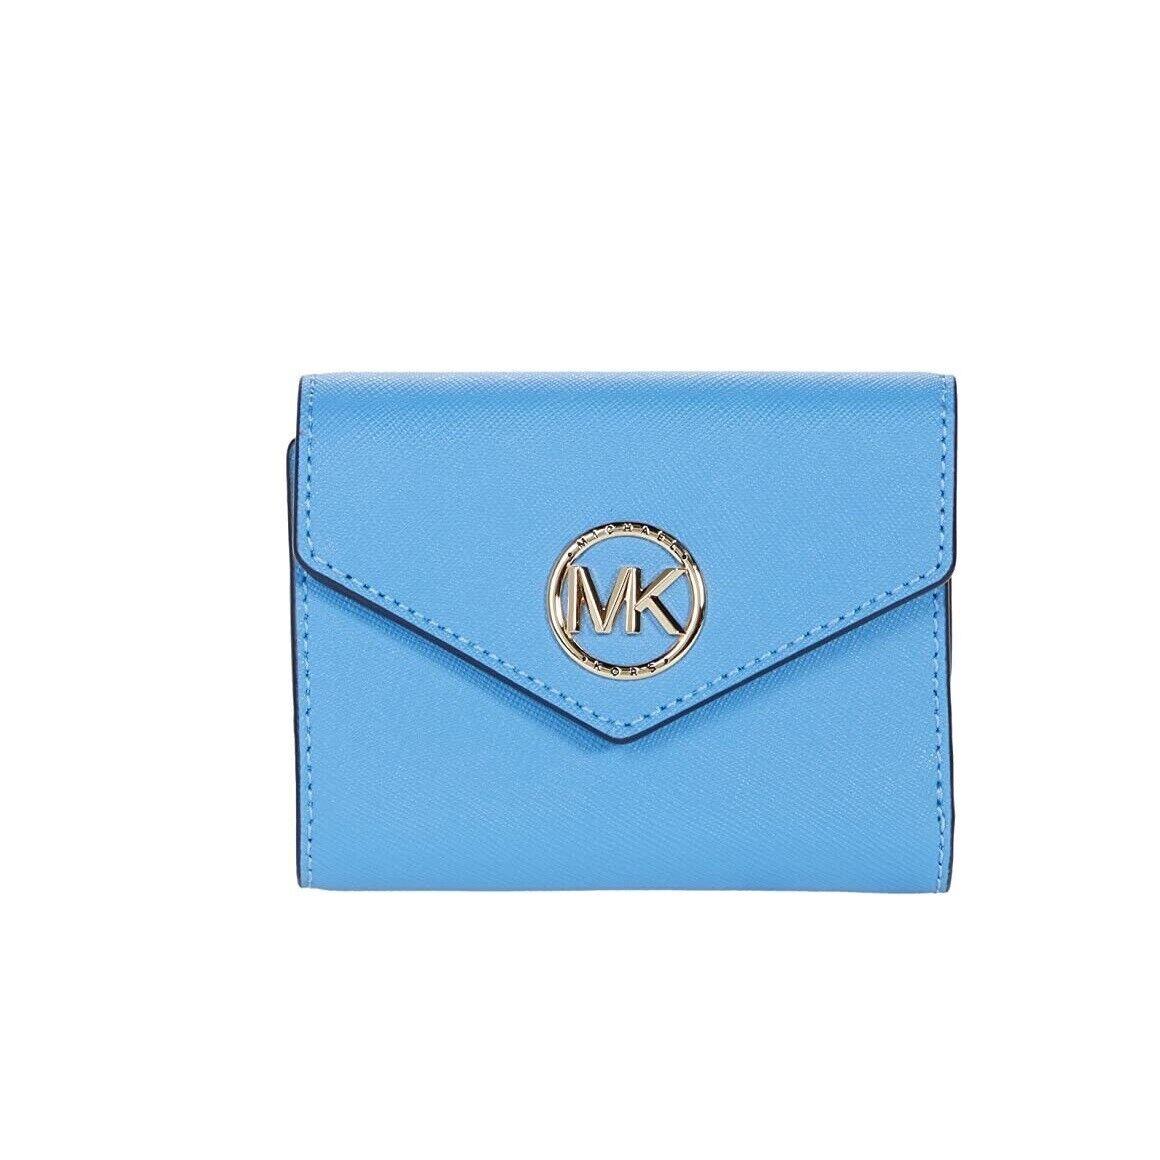 Michael Kors Women`s Carmen Medium Leather Envelope Trifold Wallet Blue